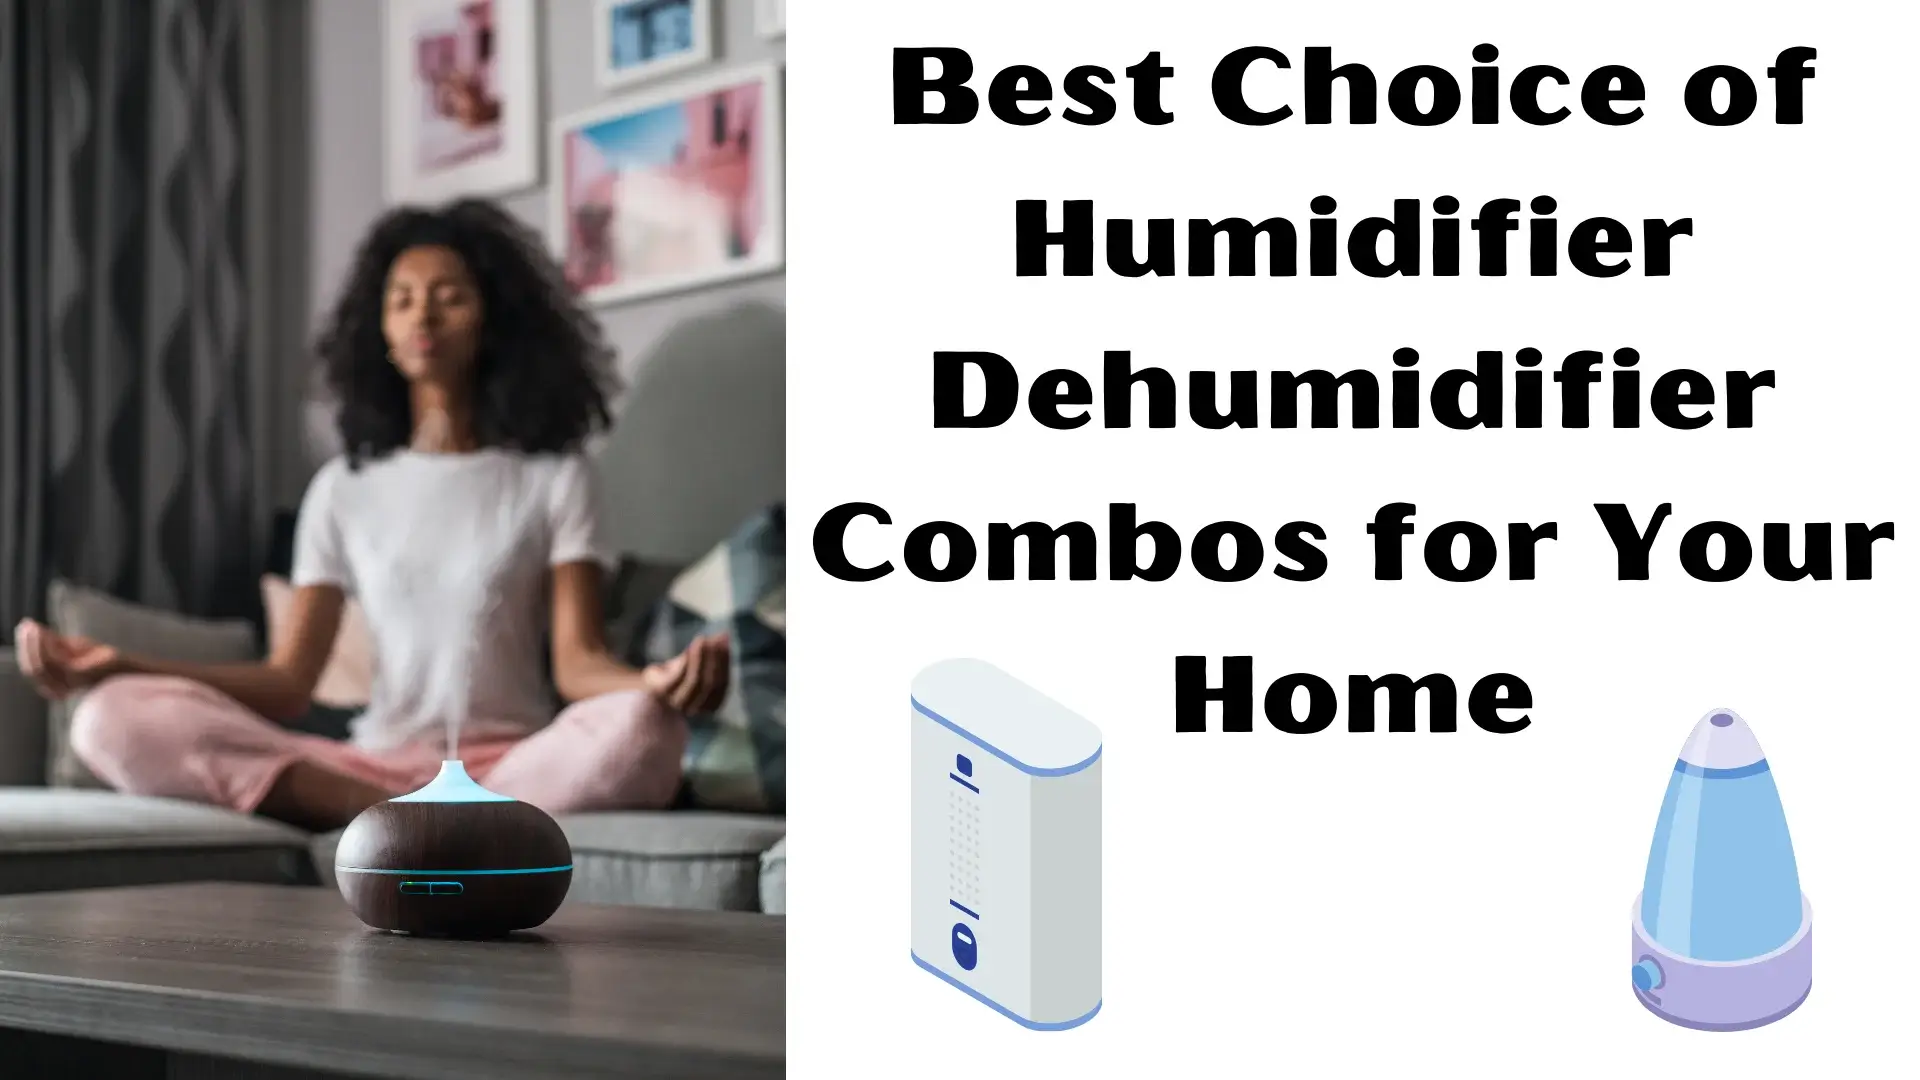 Humidifier Dehumidifier Combo